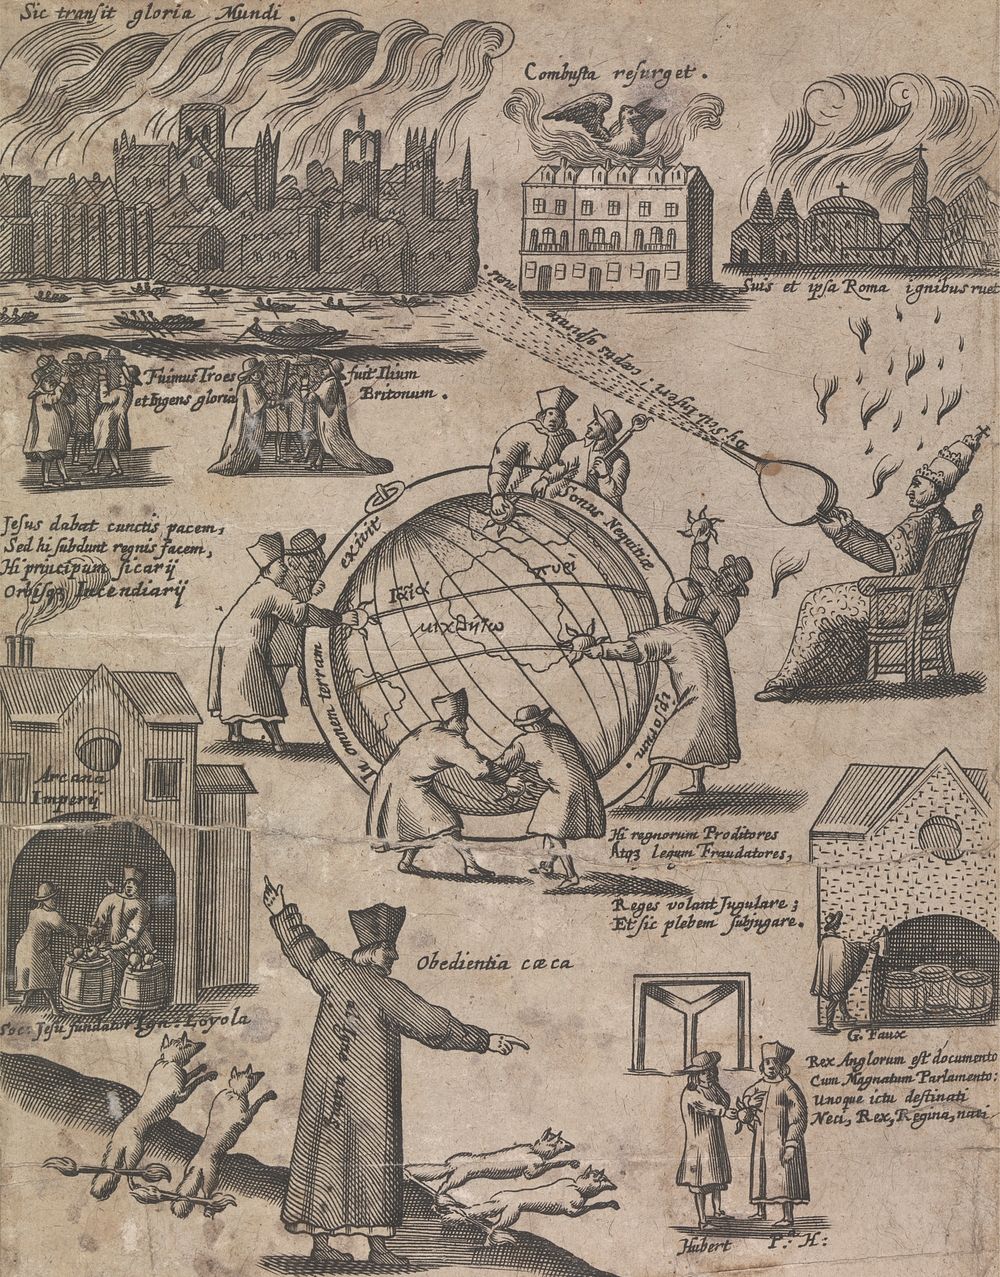 Cartoon suggesting Papist Origins of the Fire